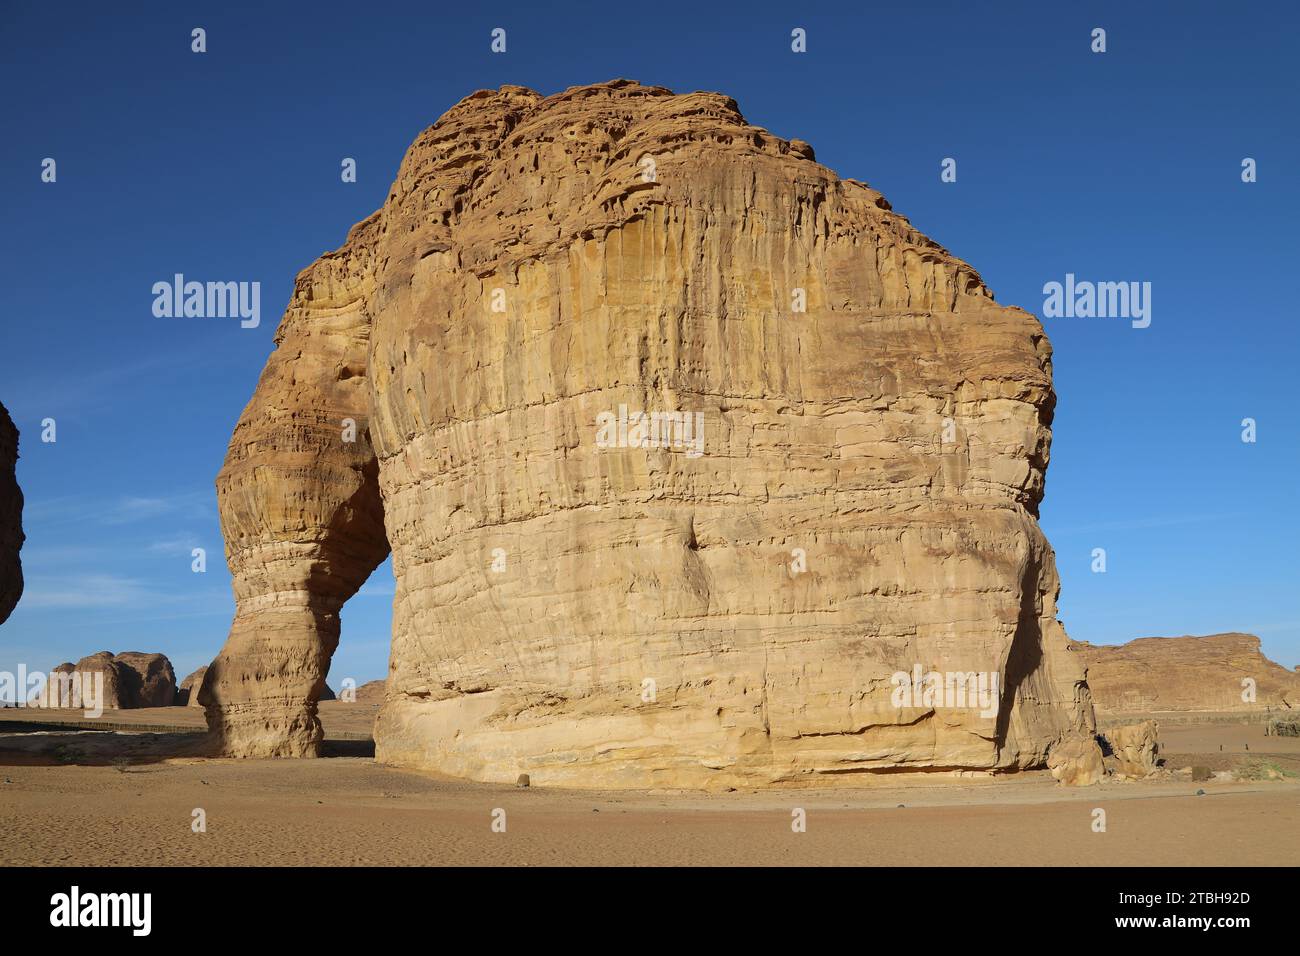 Elephant Rock nel deserto dell'Arabia Saudita Foto Stock